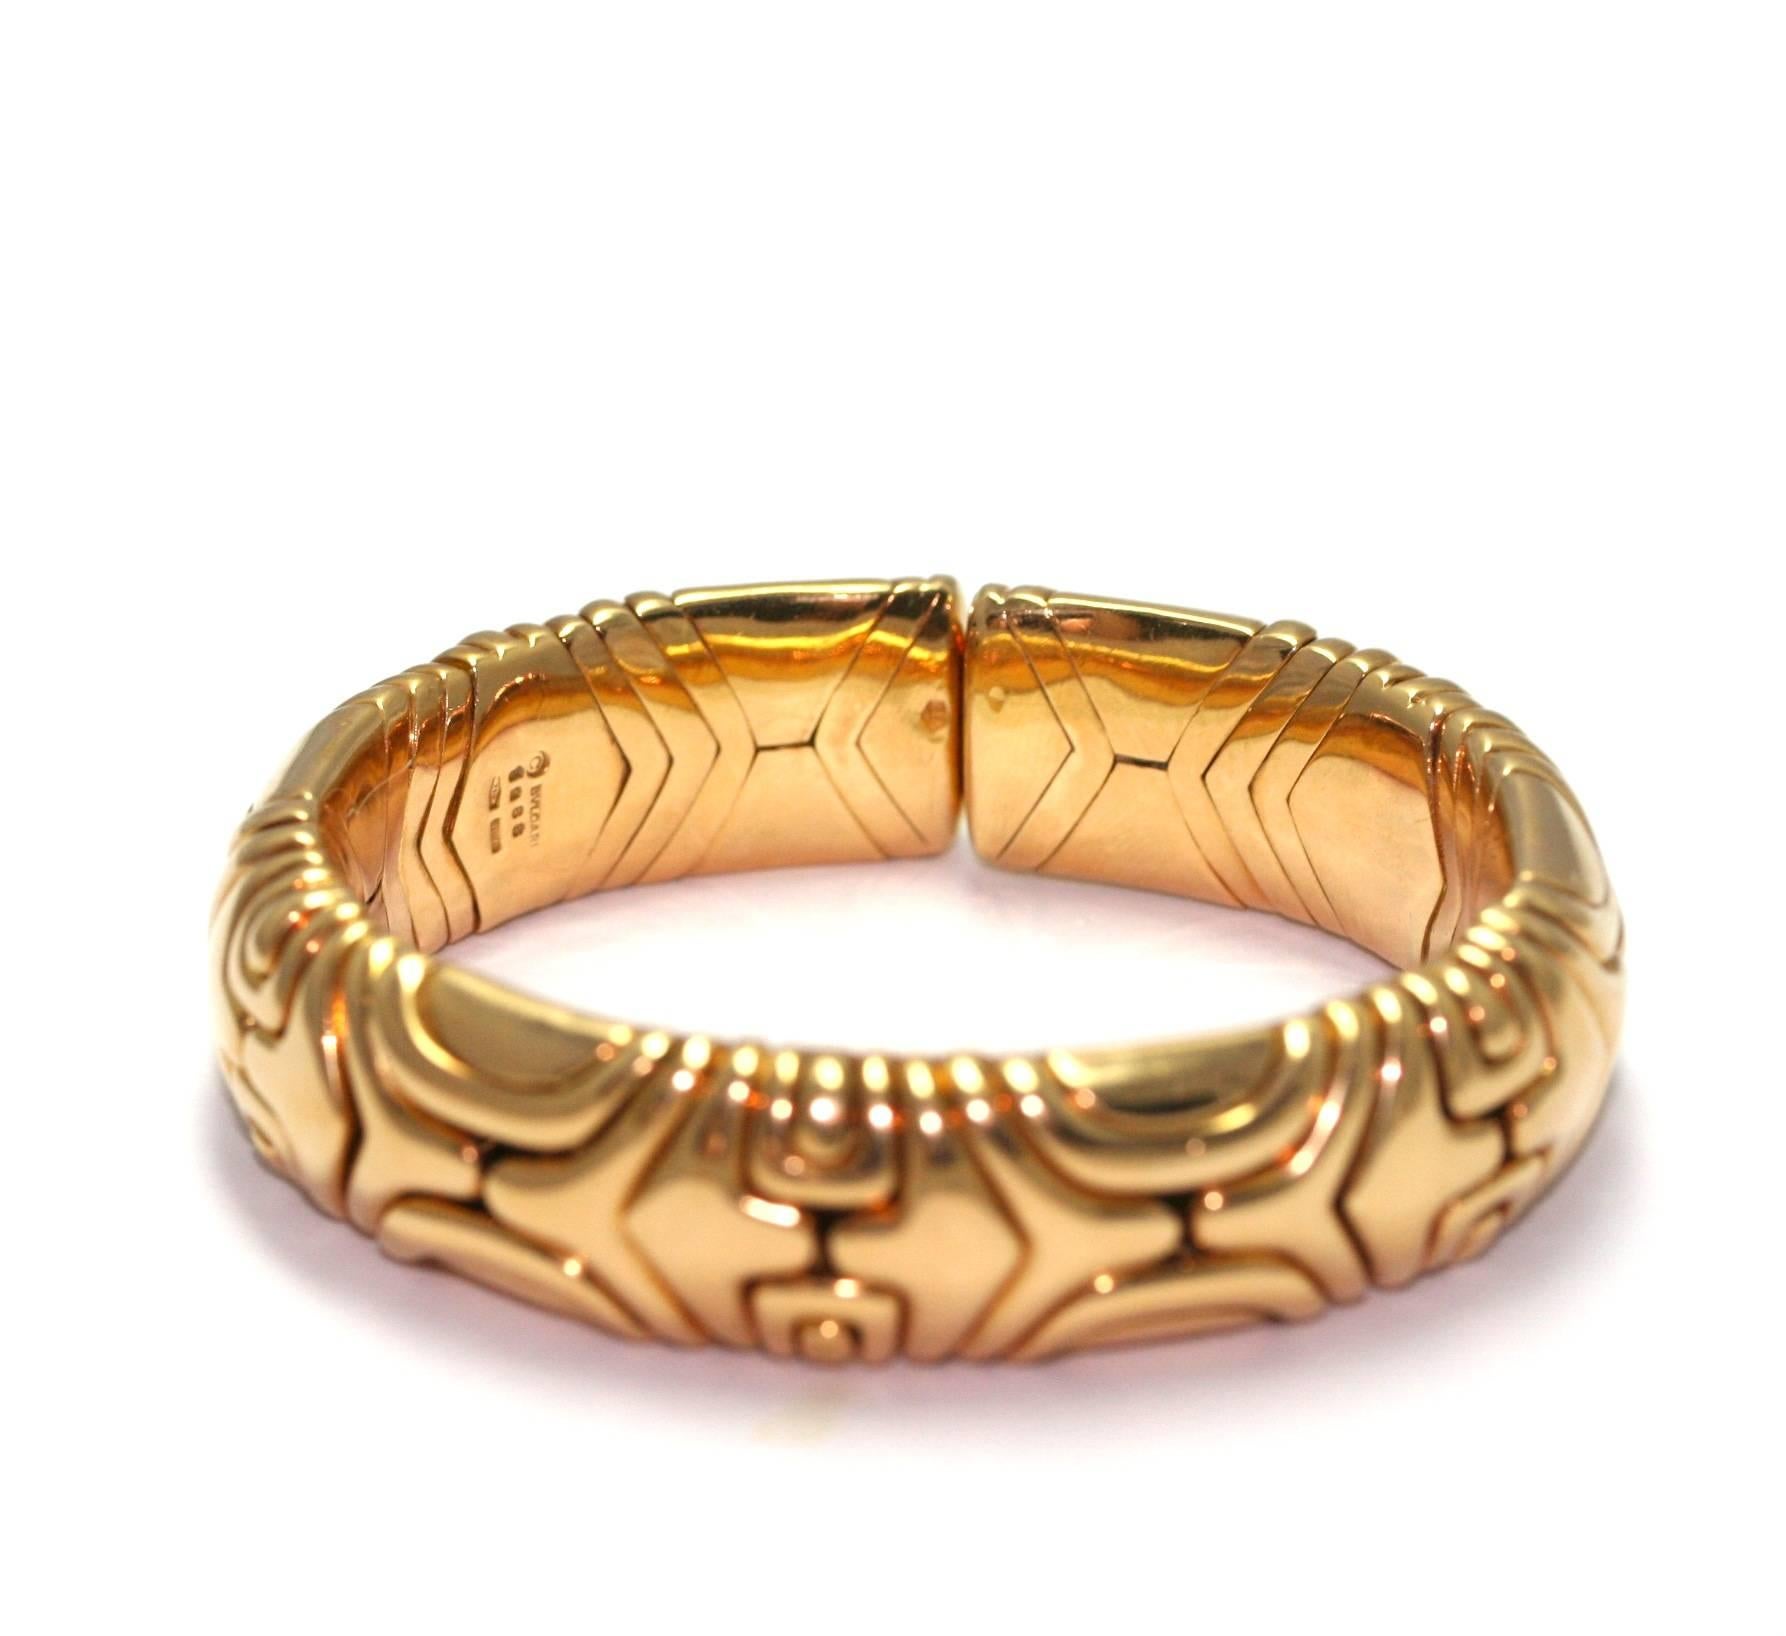 BULGARI Semi-rigid bracelet, in yellow gold.
Signed 